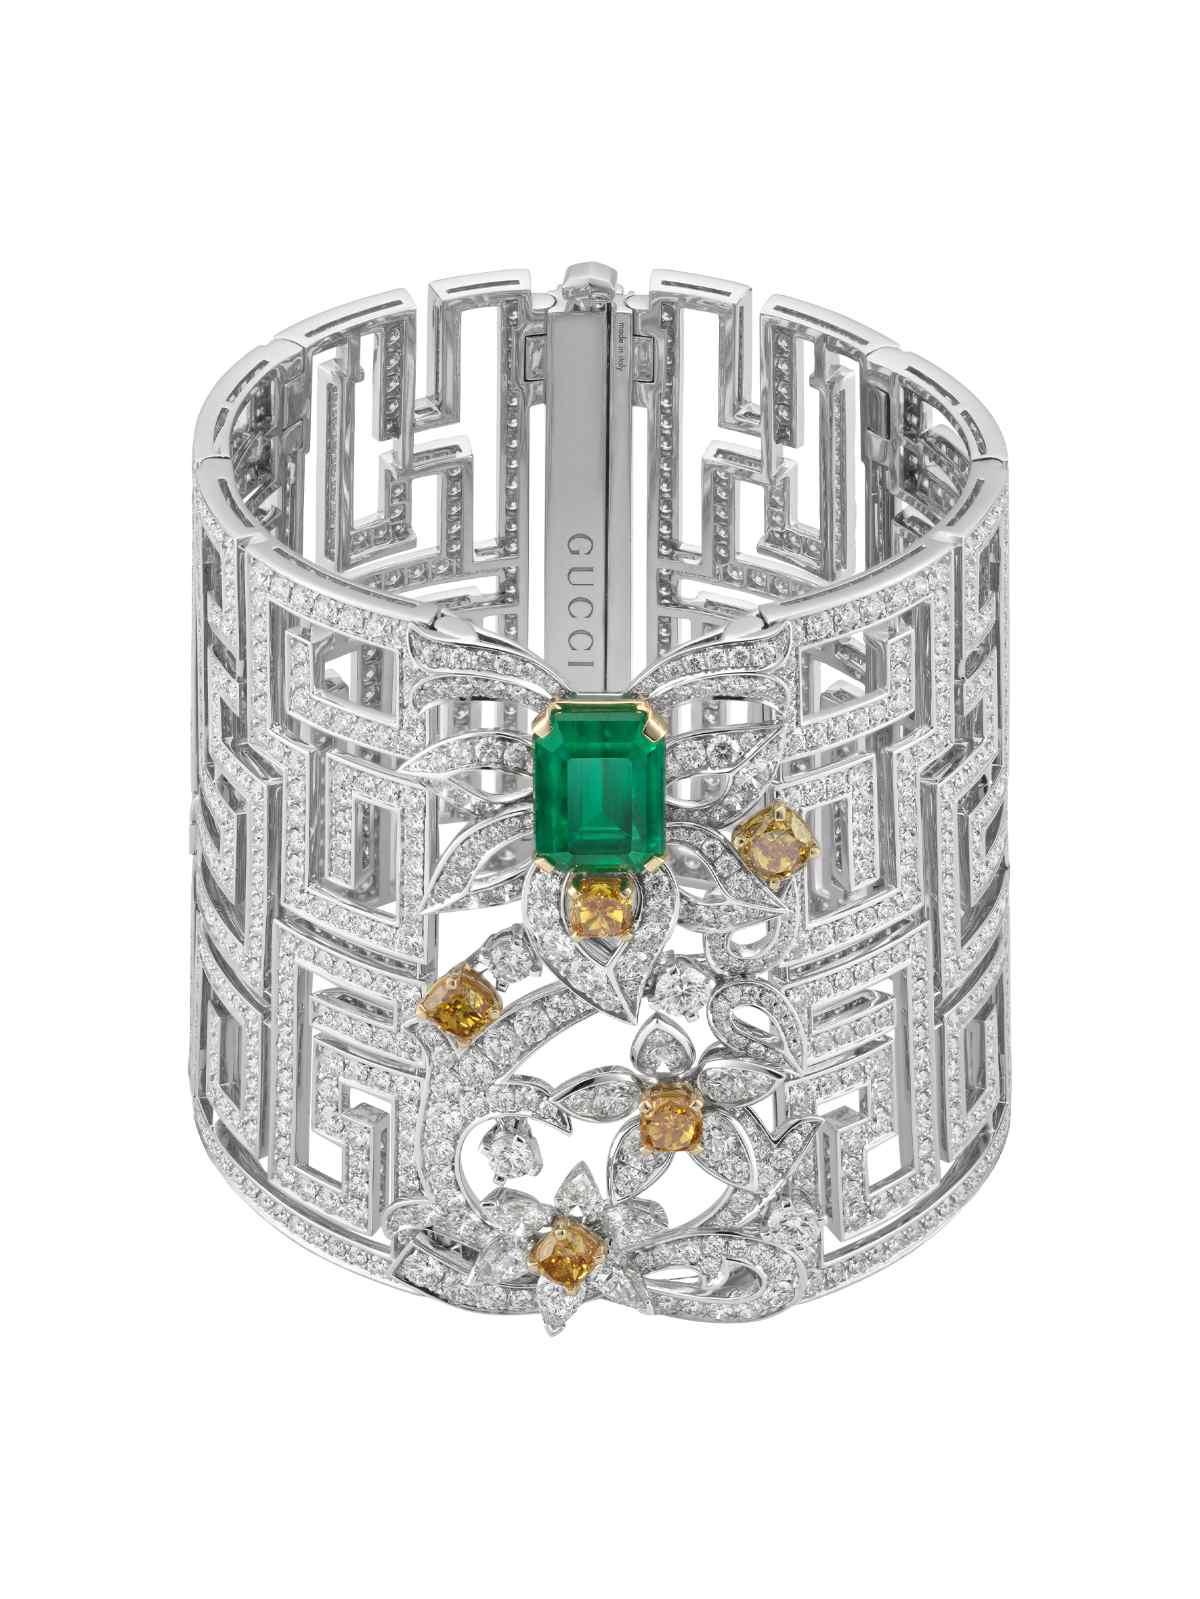 Gucci Presents Its New High Jewelry Collection: Labirinti Gucci